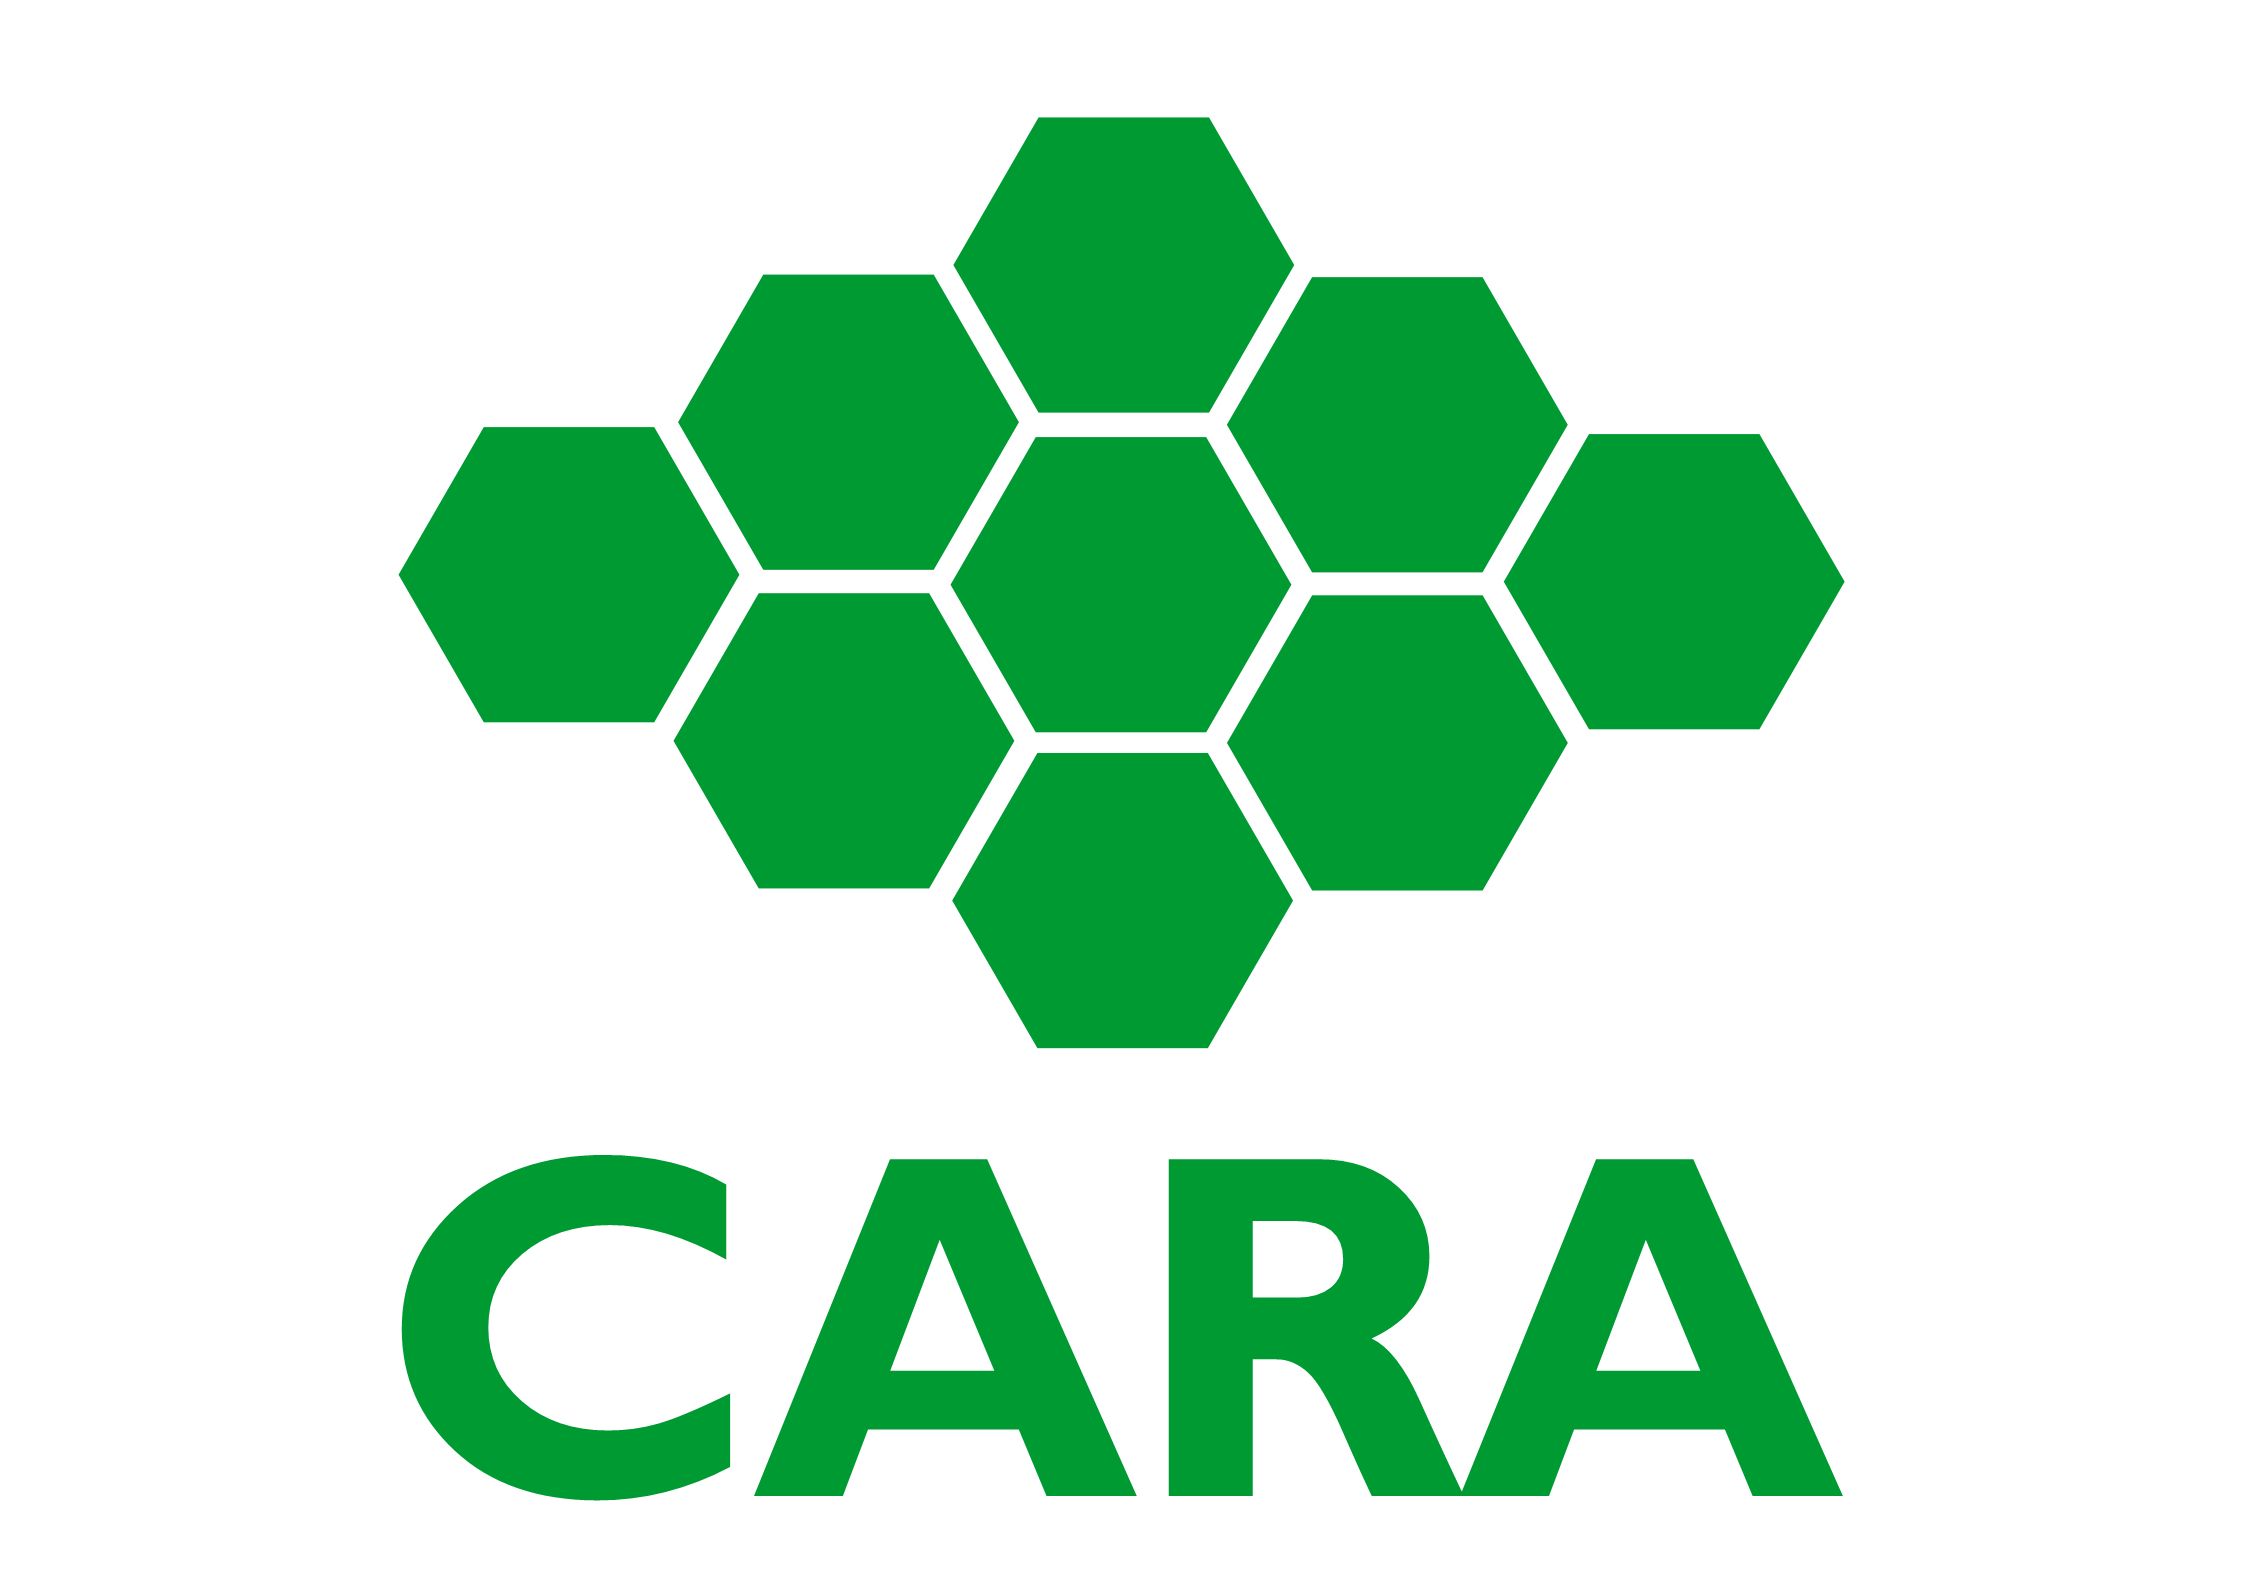 CARA Development Foundation